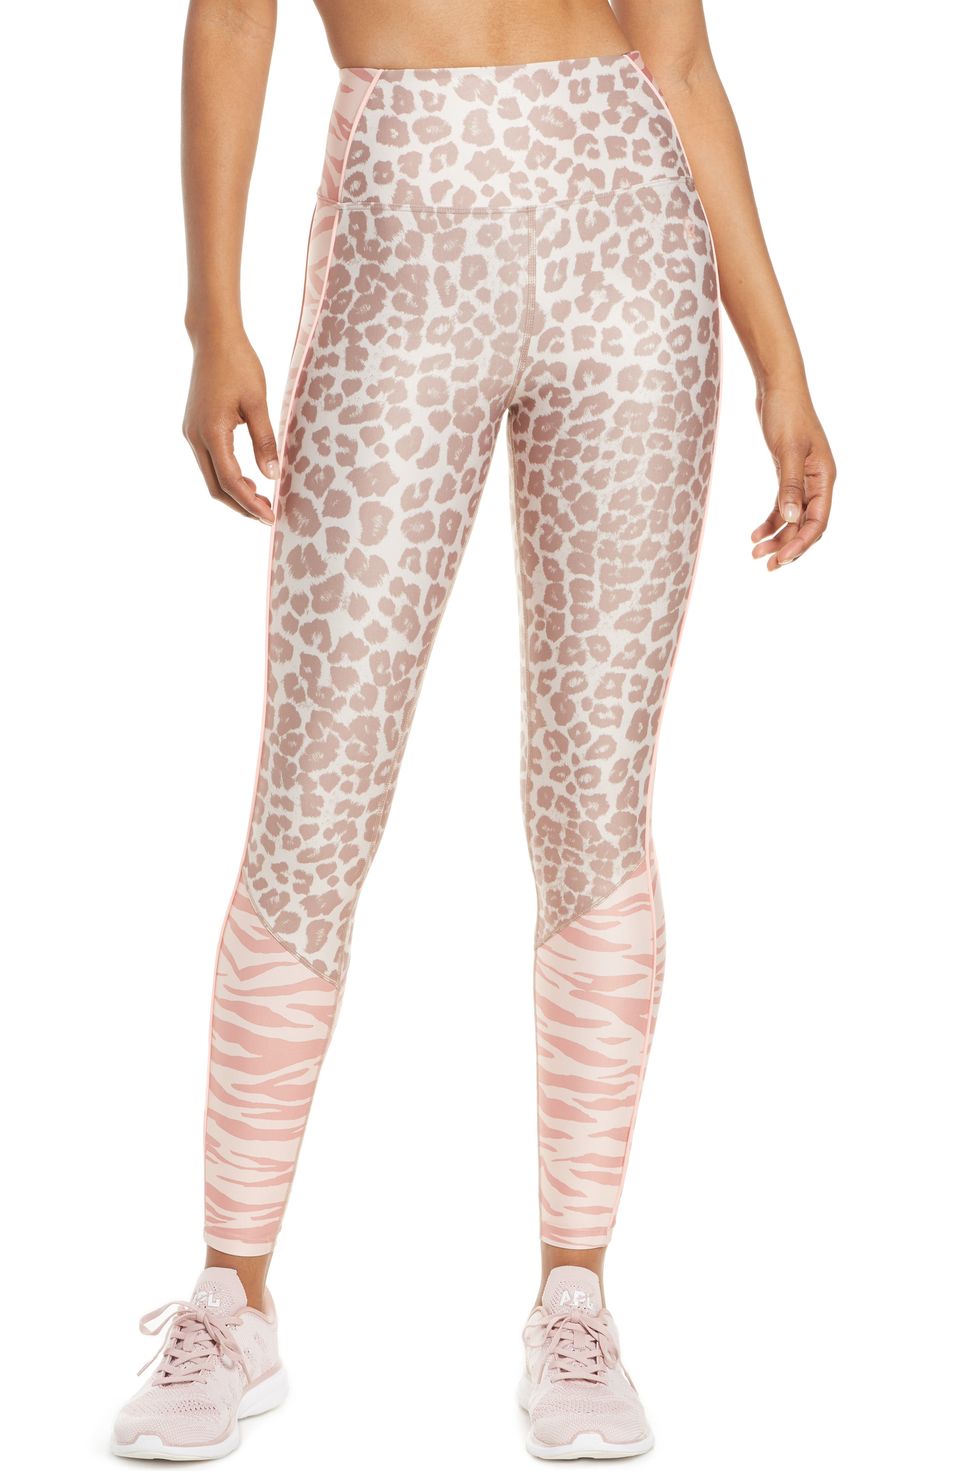 Calvin Klein Women's Leopard Print High-Waist Leggings Purple Size Medium